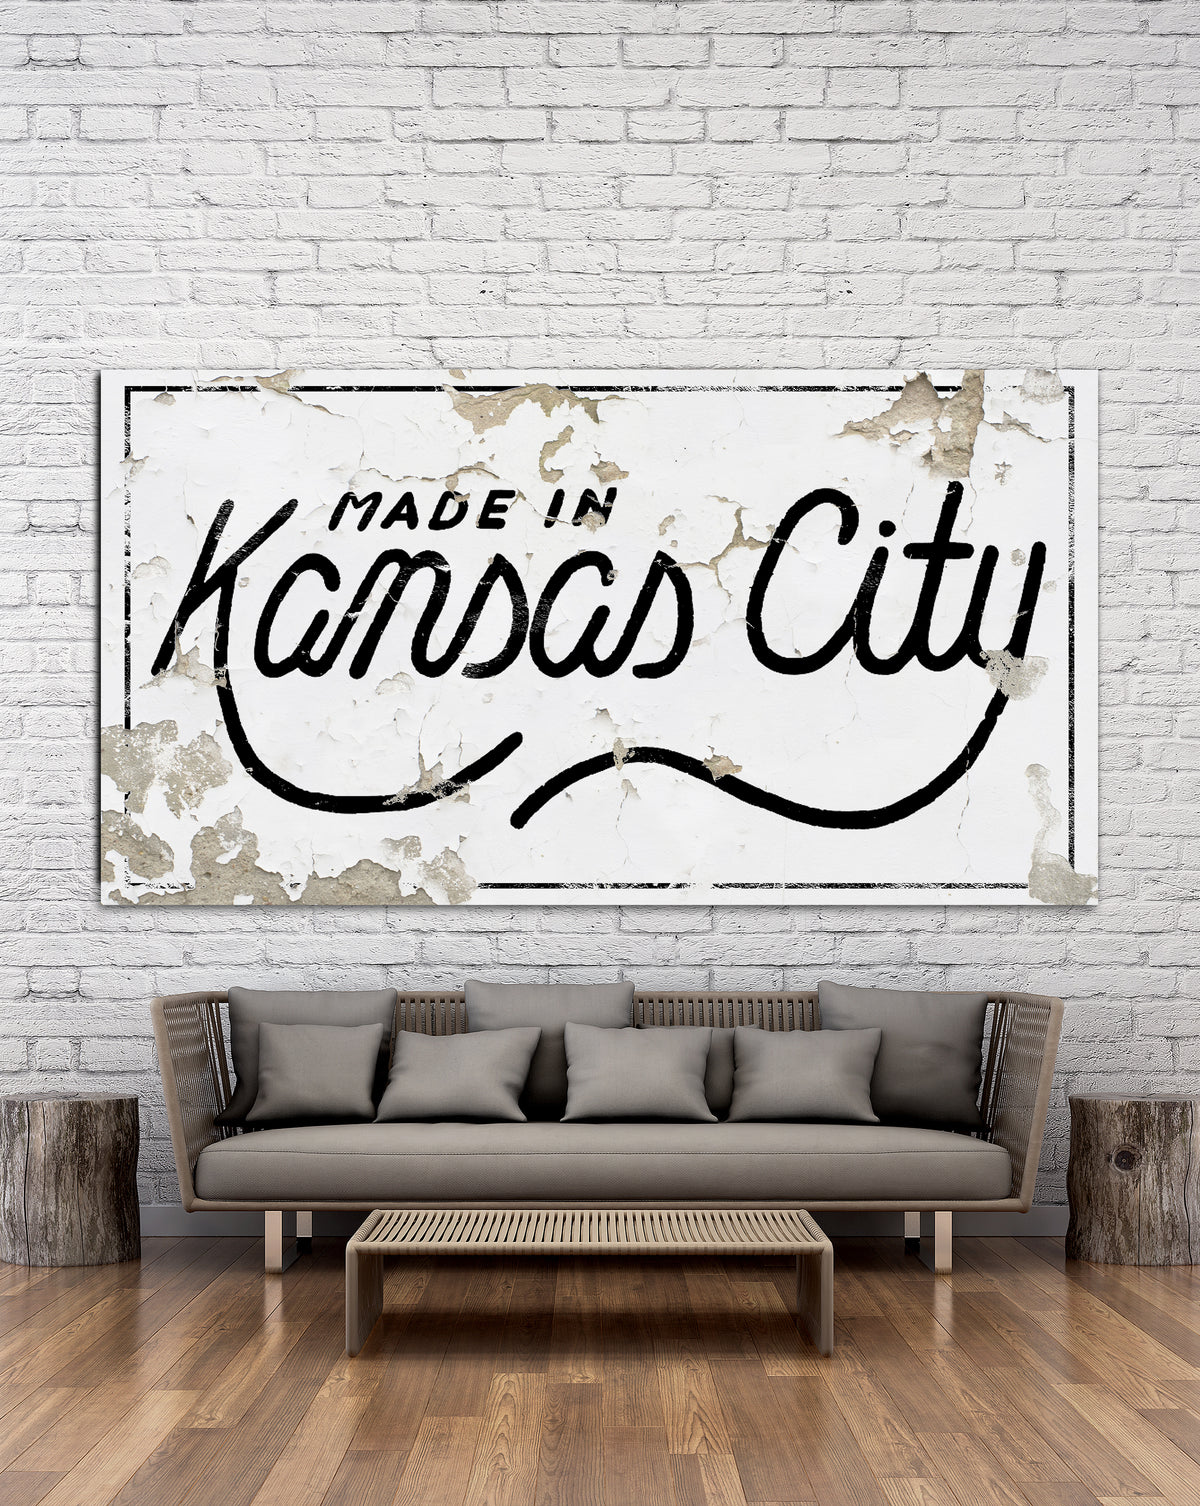 Made in the Kansas City - Farmhouse Decor Canvas Wall Decor Vintage Sign